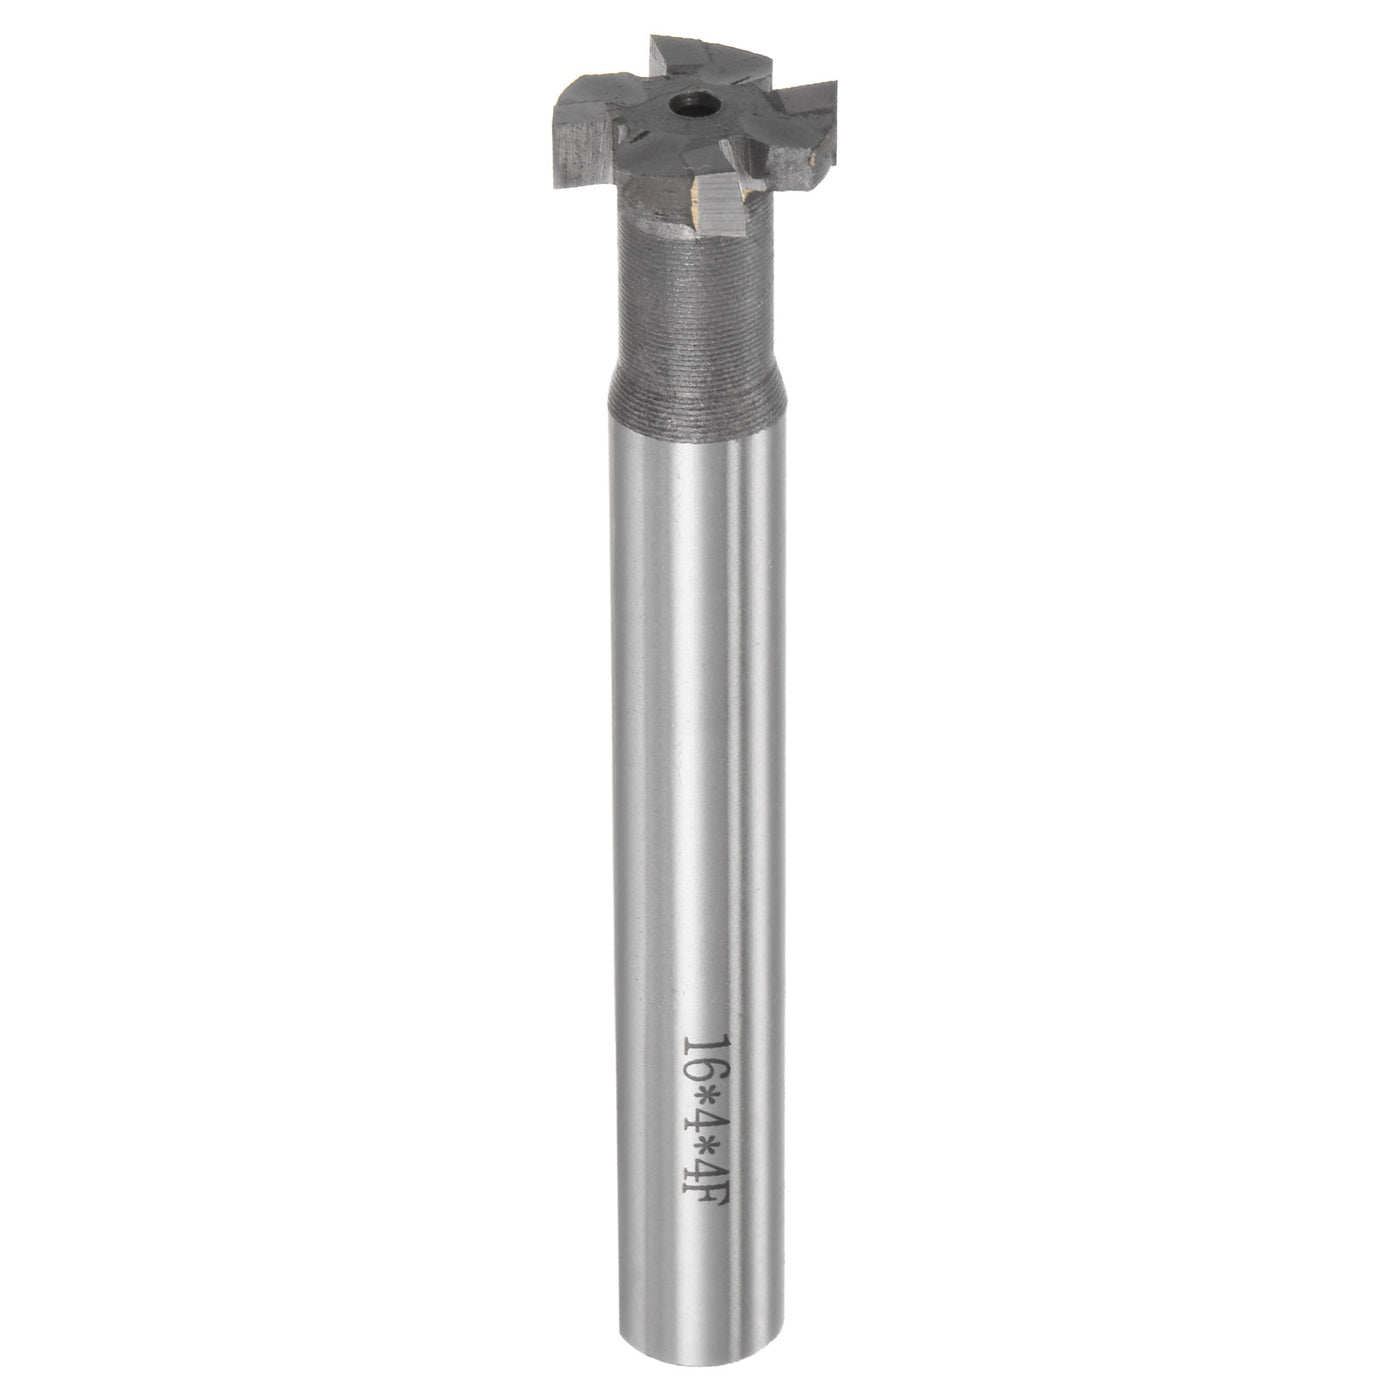 uxcell Uxcell 4mm Depth 16mm Cutting Dia 10mm Shank Carbide Tip 4 Flute T-Slot Milling Cutter